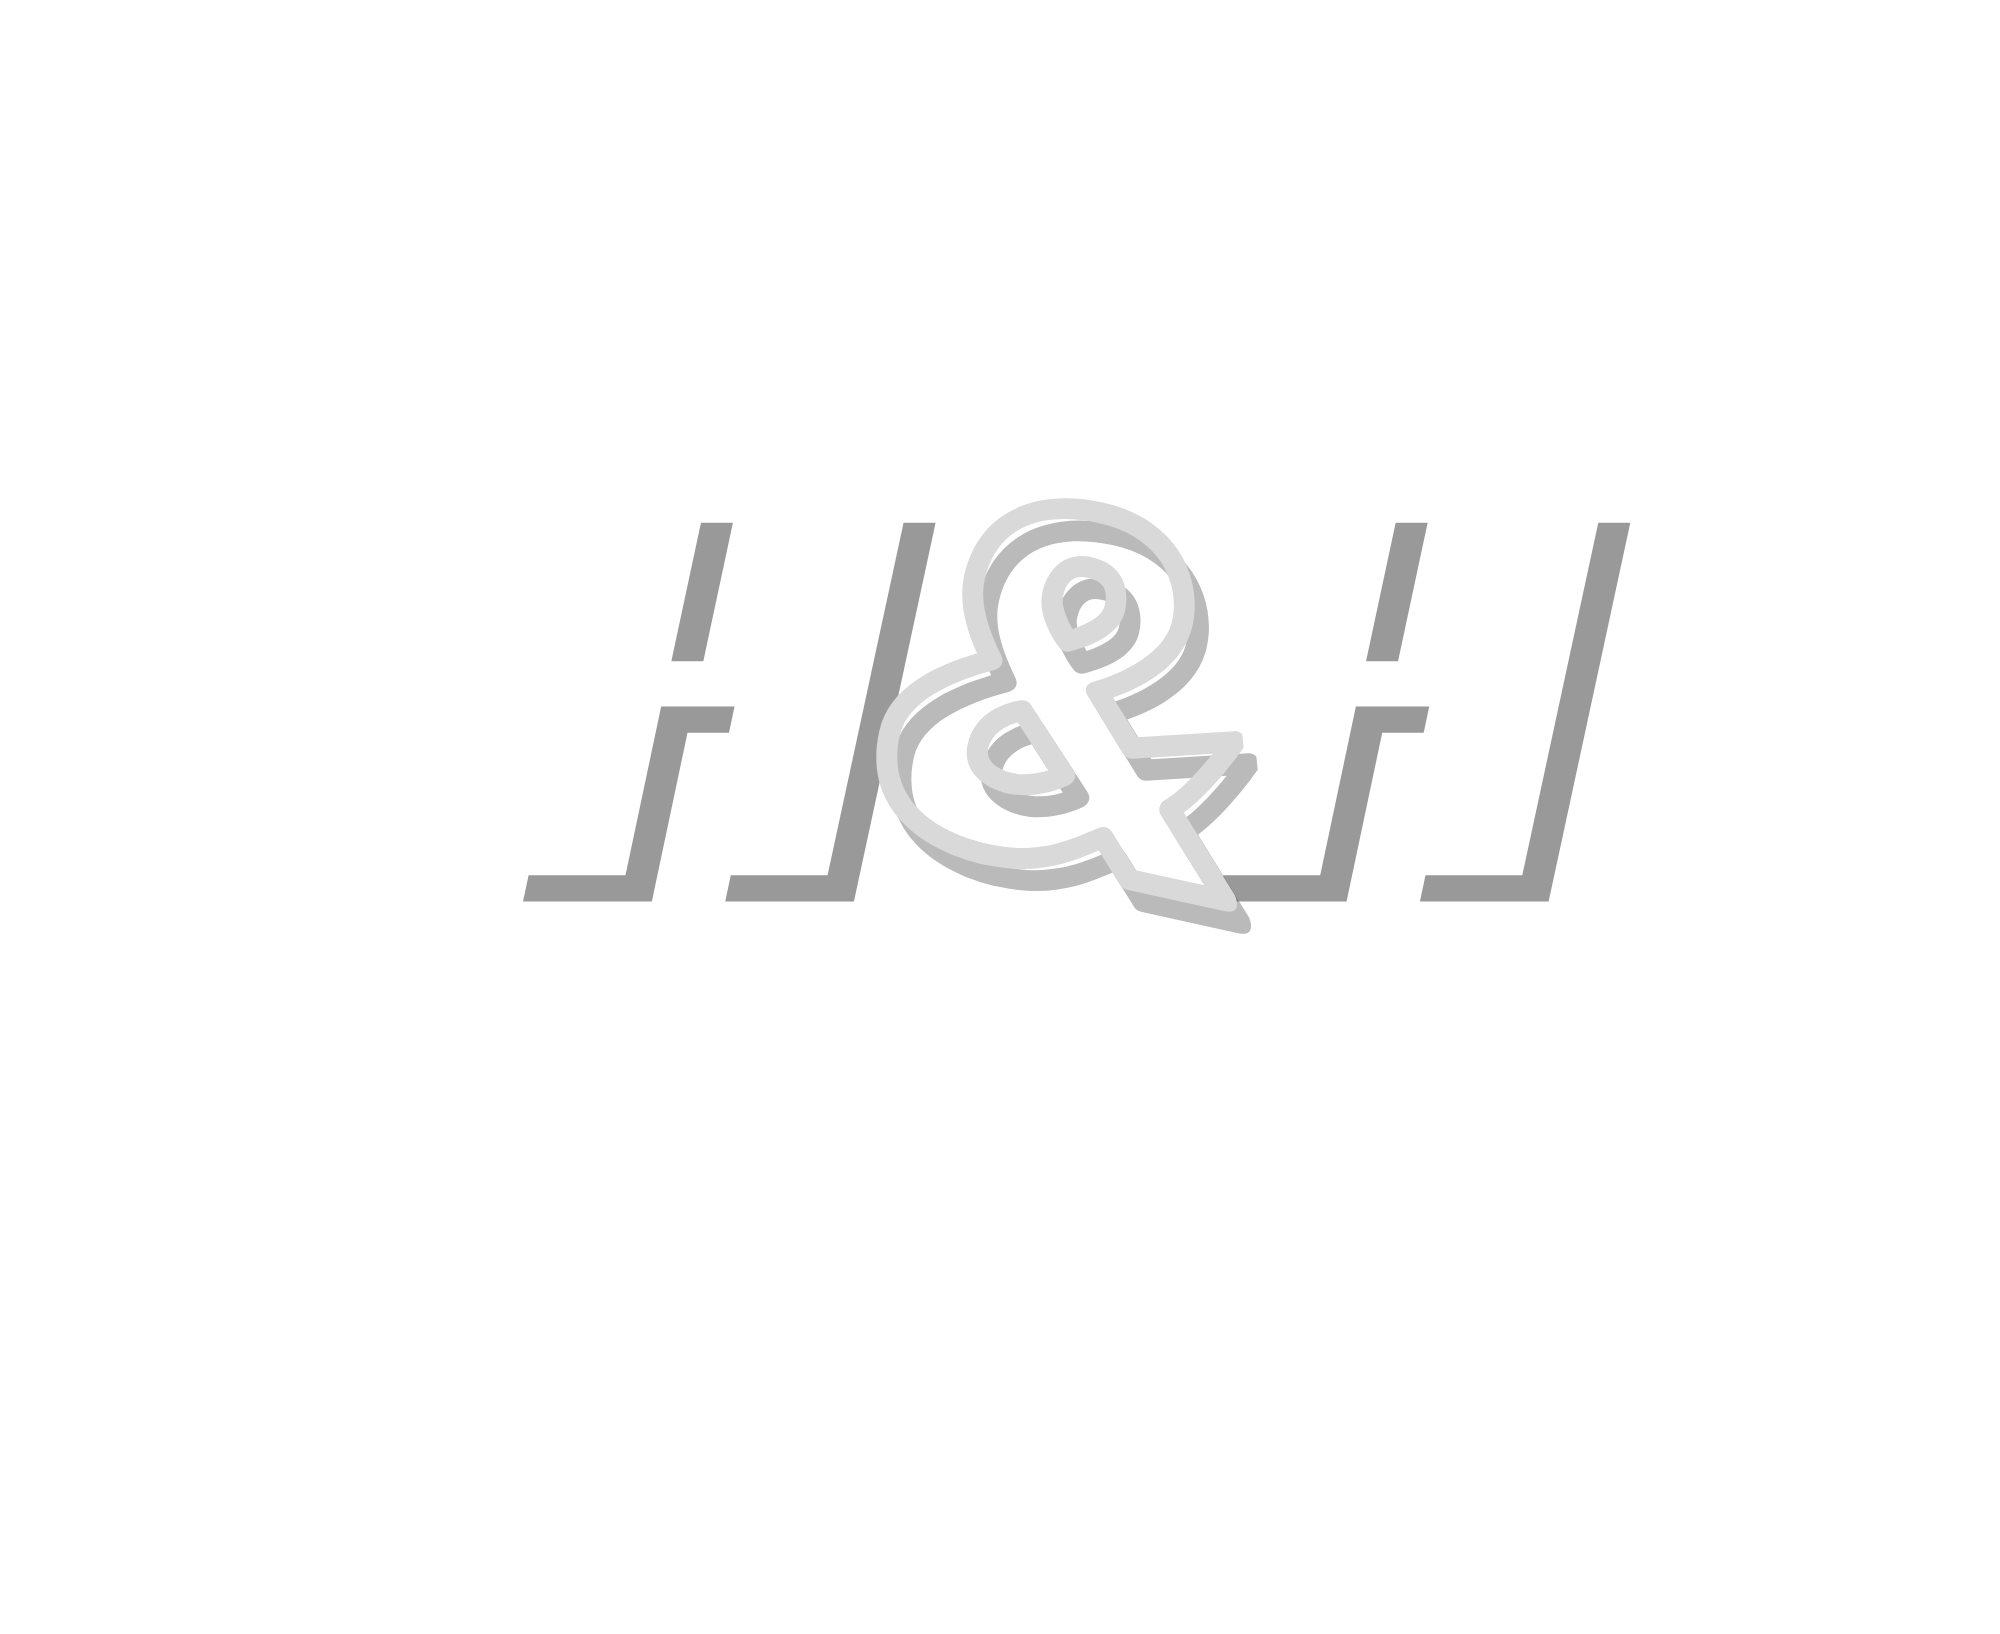 H & H Construction LLC